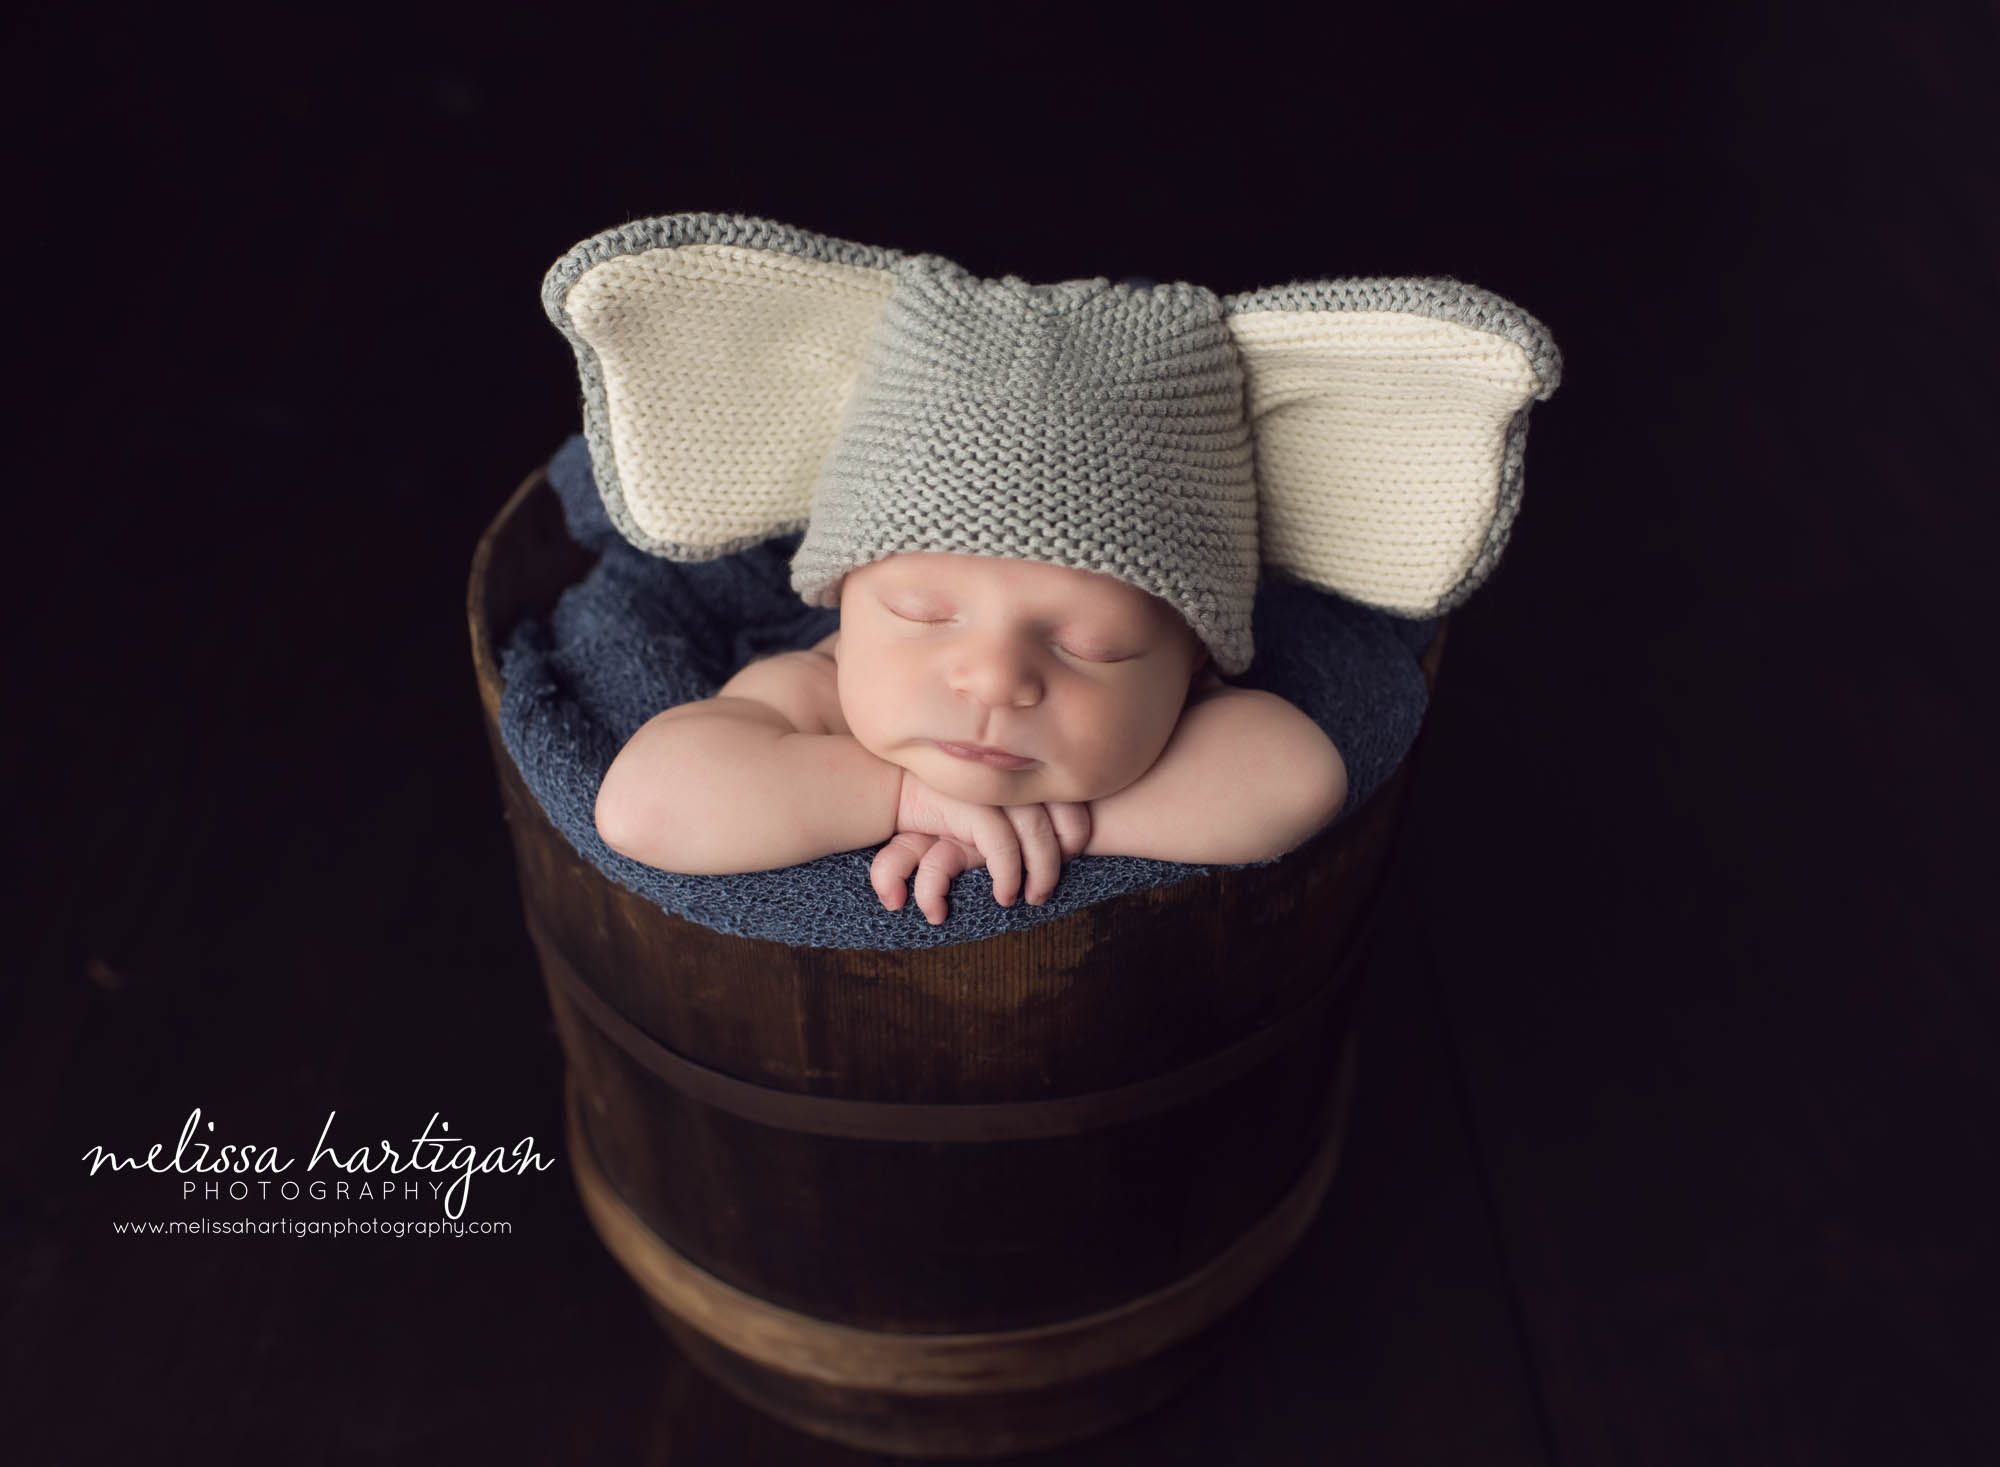 Melissa Hartigan Photography Newborn Photographer Connecticut baby boy sleeping in wooden bucket with blue throw wearing elephant knit hat